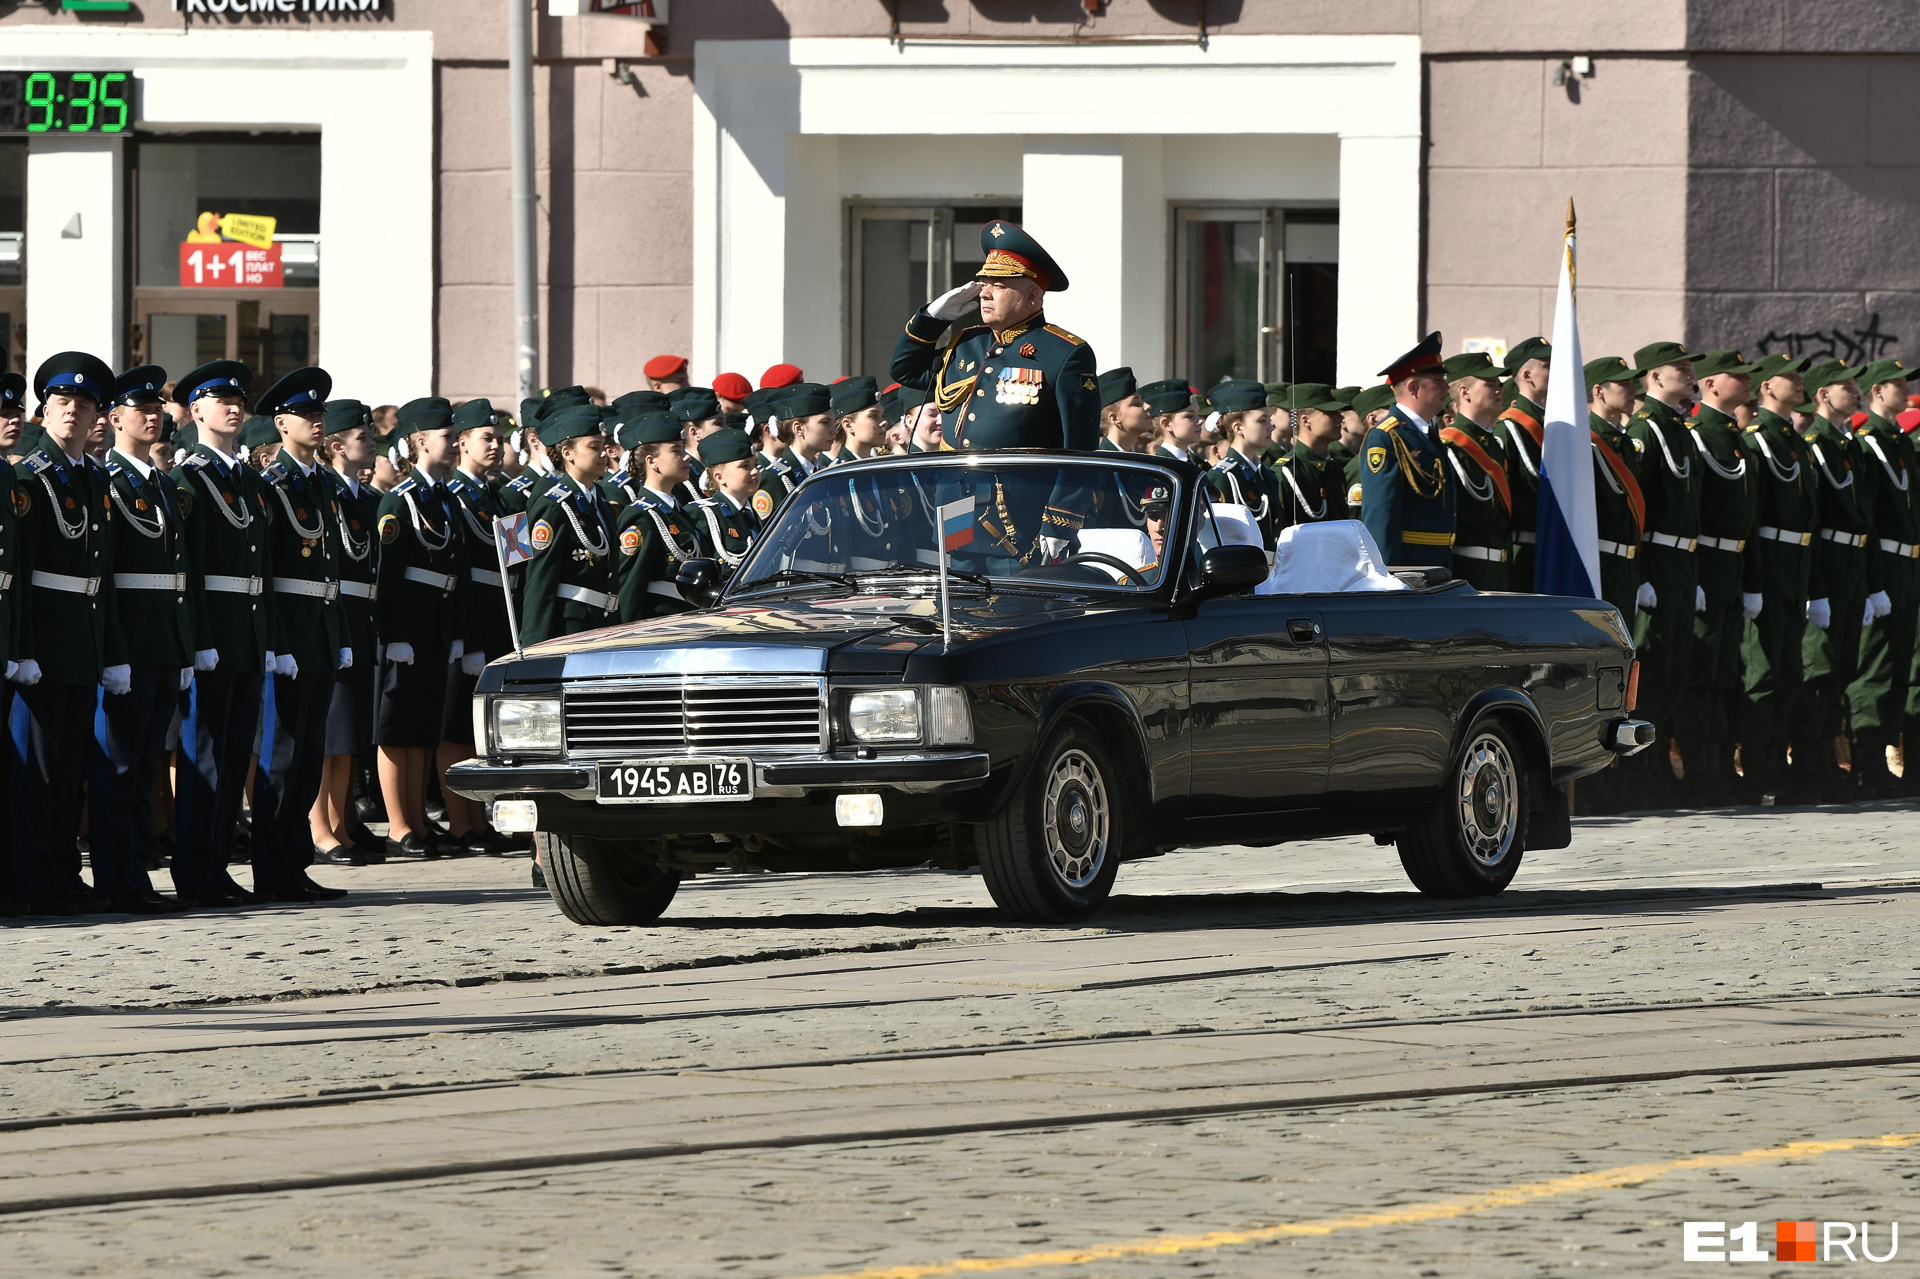 Командующий парадом генерал-майор Александр Линьков